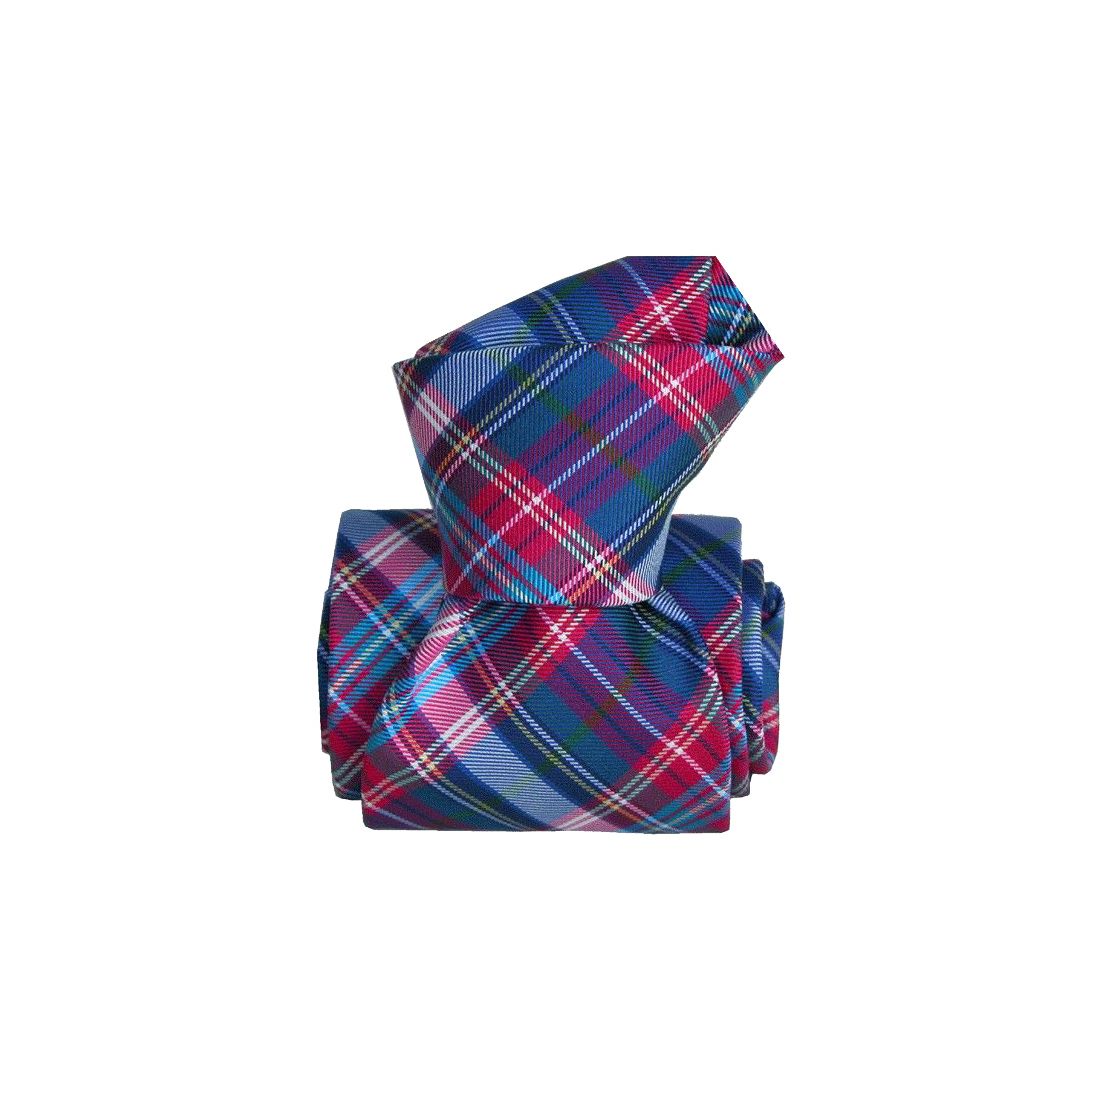 Cravate Classique Segni Disegni, Scotland, Carreaux Segni et Disegni